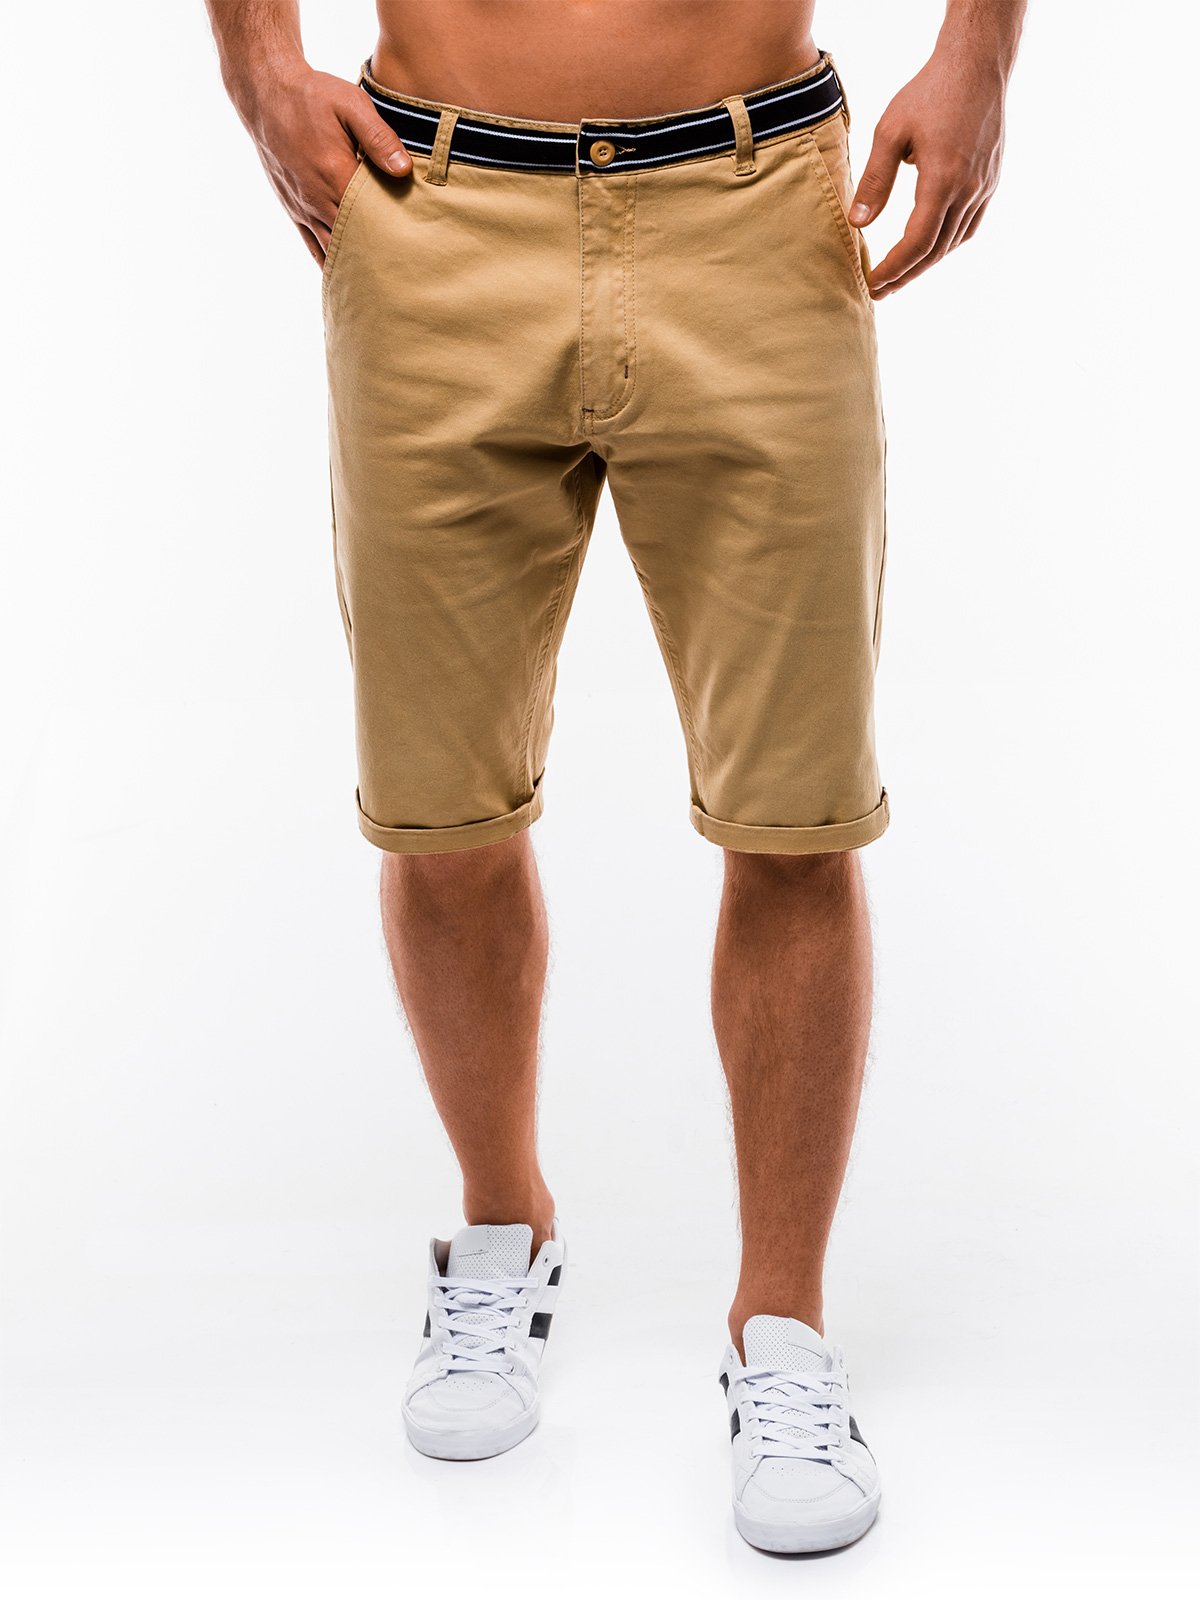 Men's bermuda shorts P402 - beige | MODONE wholesale - Clothing For Men